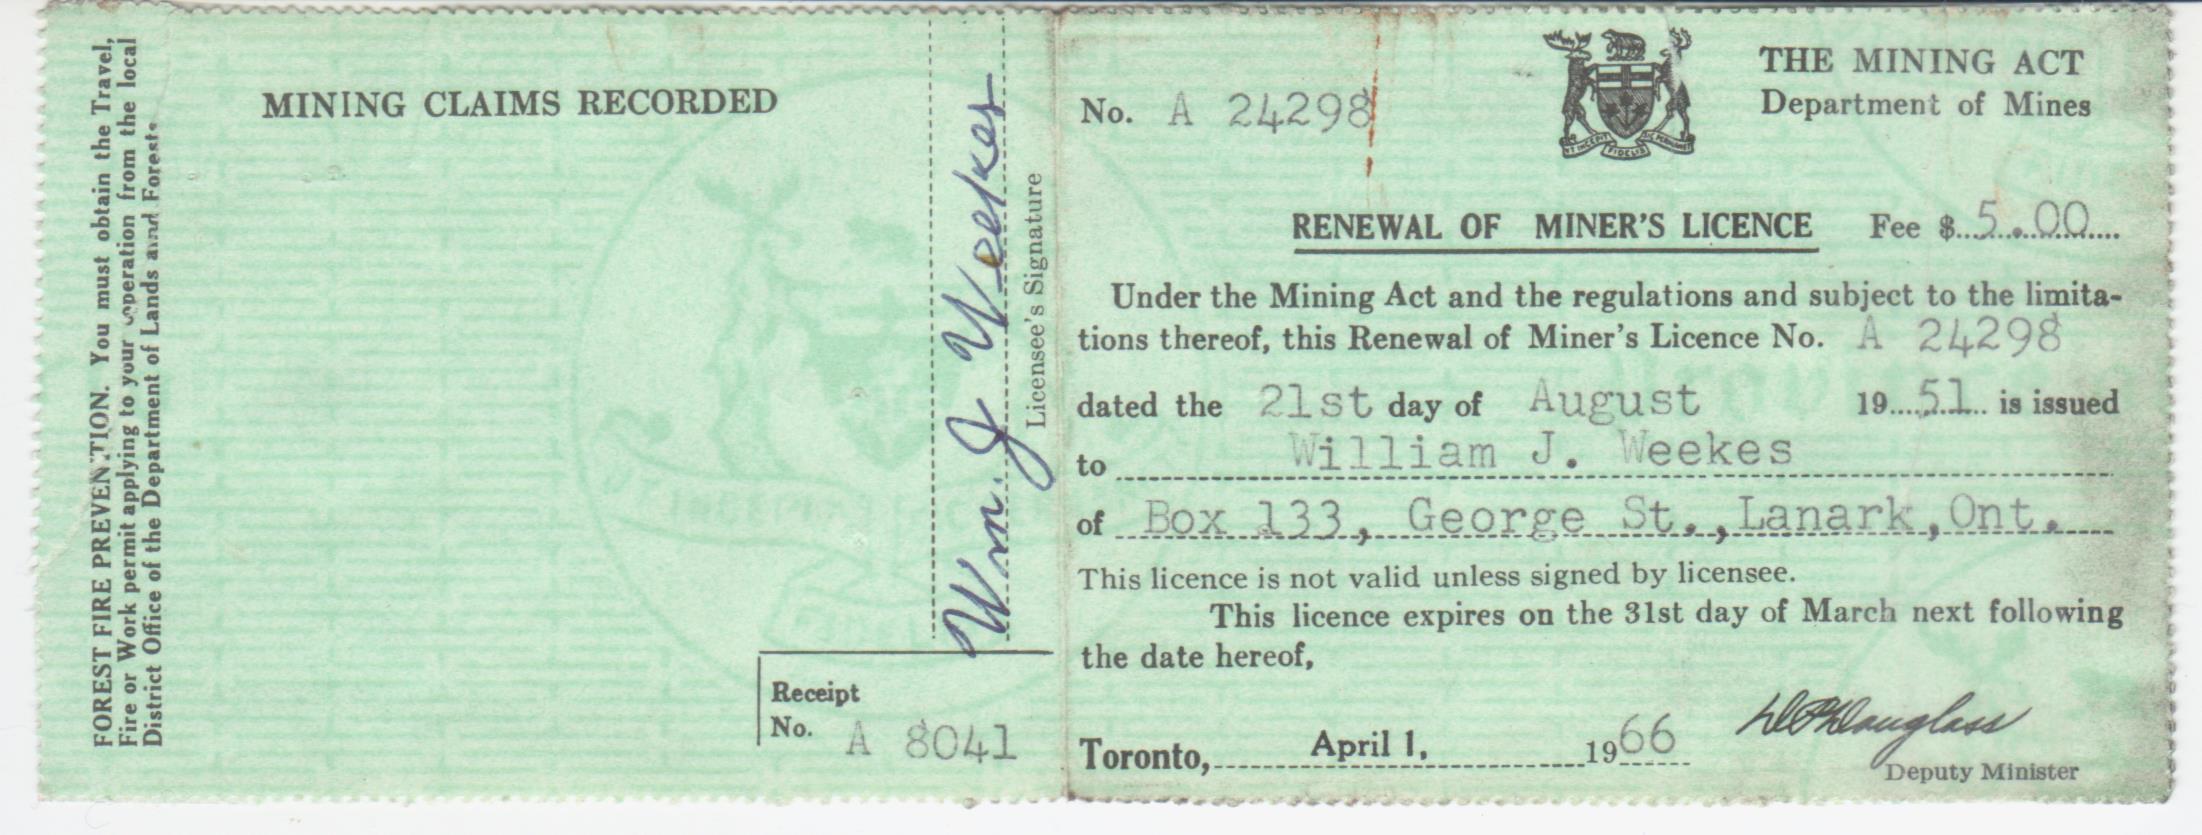 Norman's miner's license